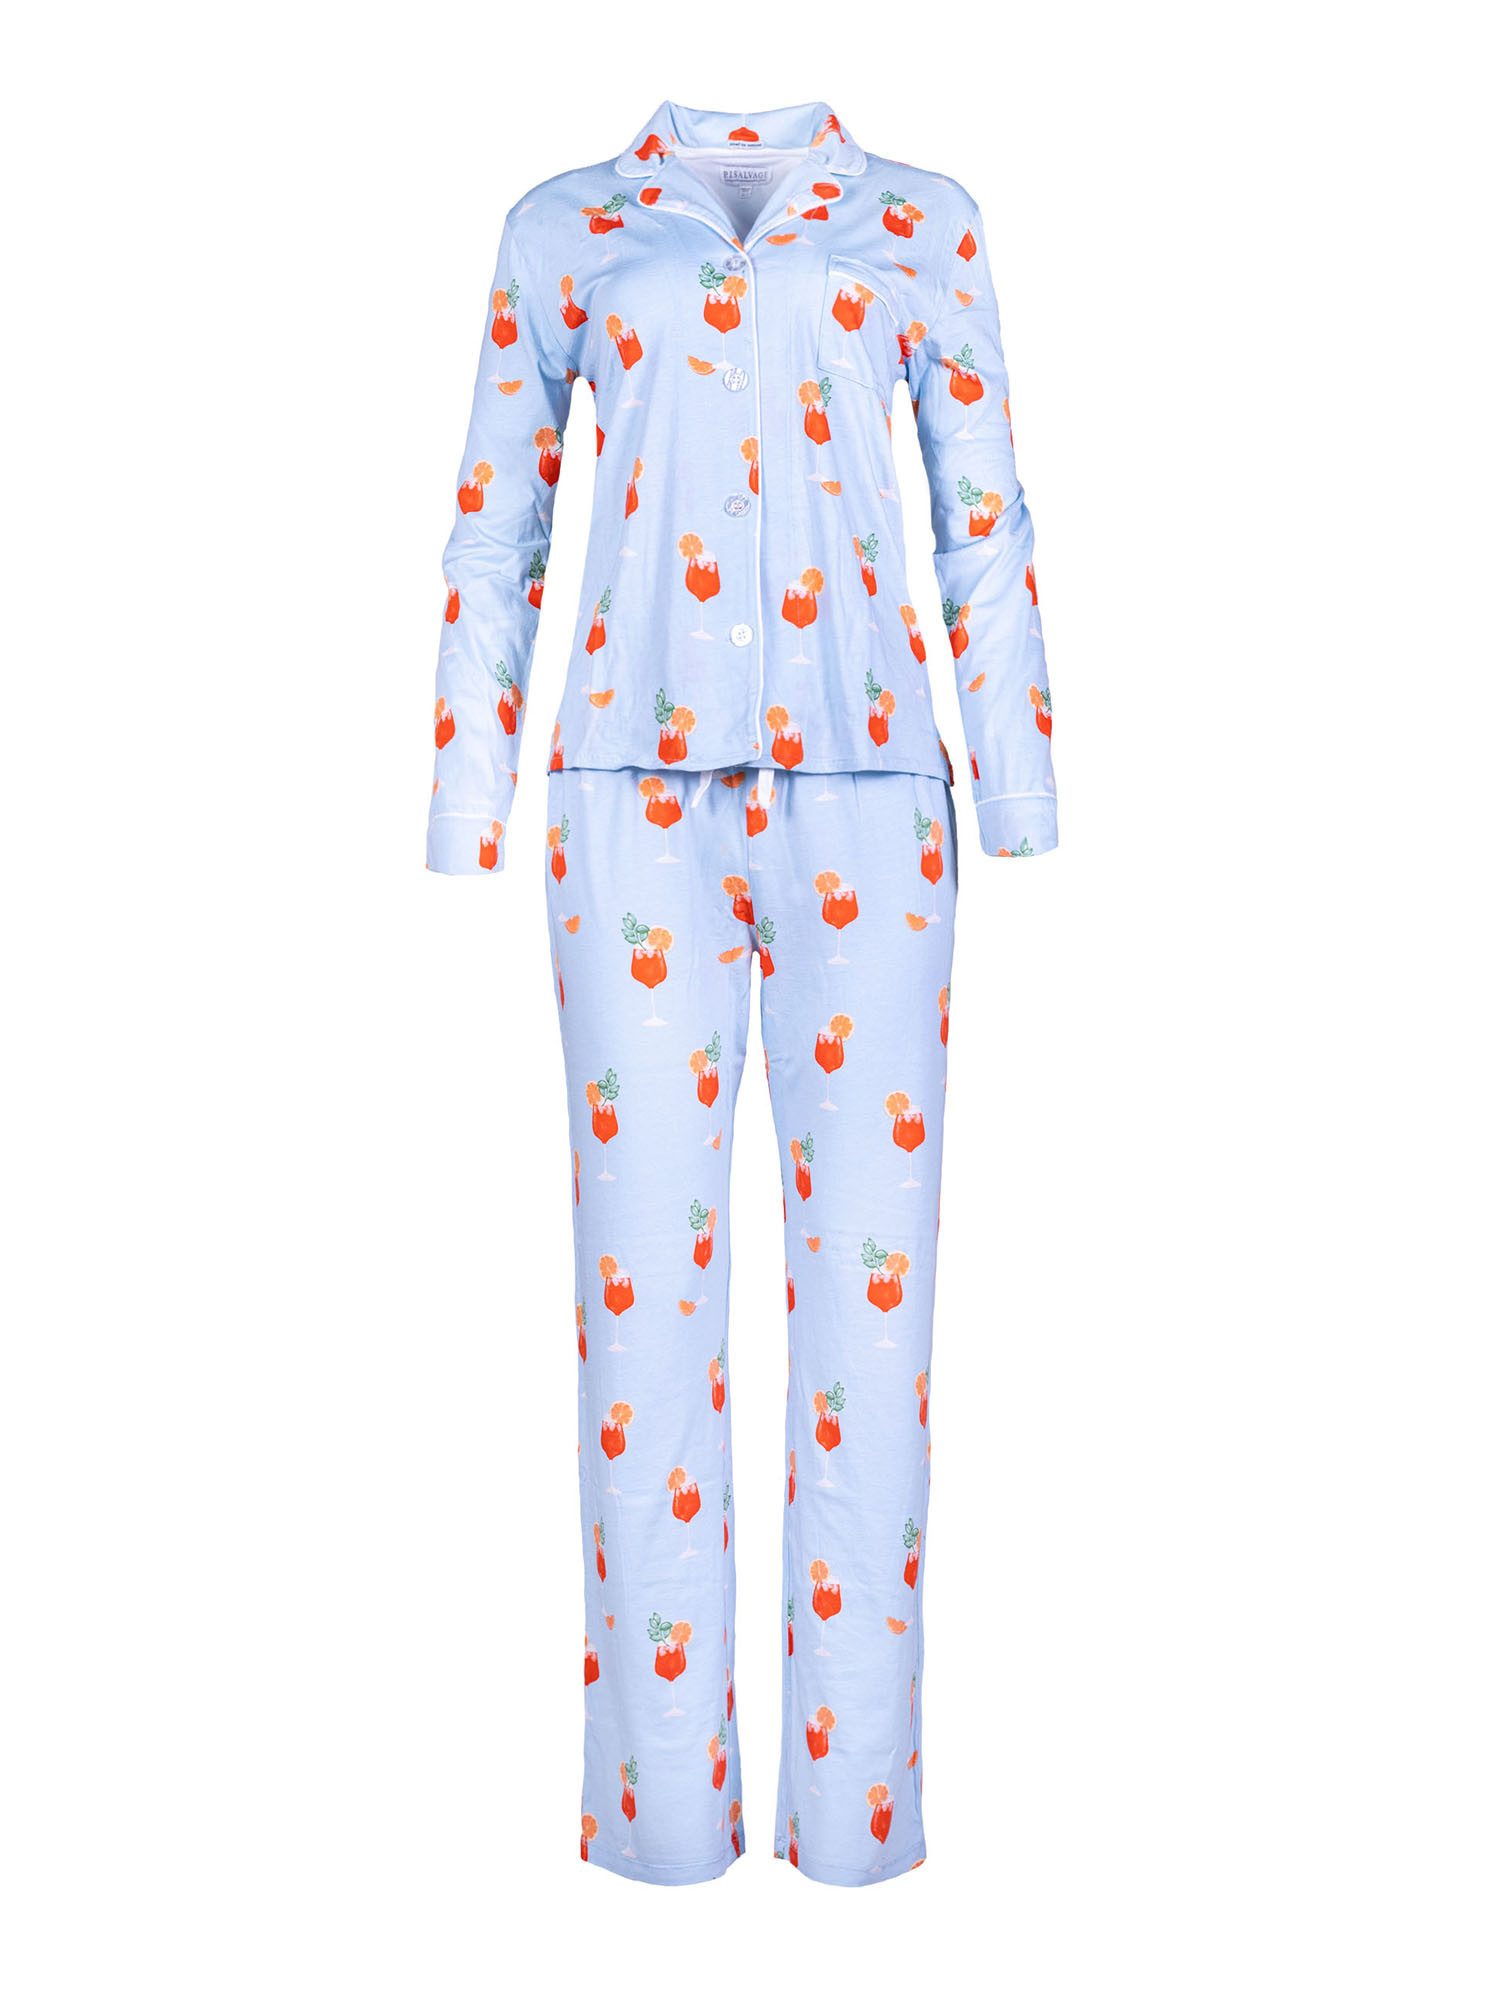 PJ Salvage Pyjama Playful Prints (2 tlg) schlafanzug schlafmode bequem